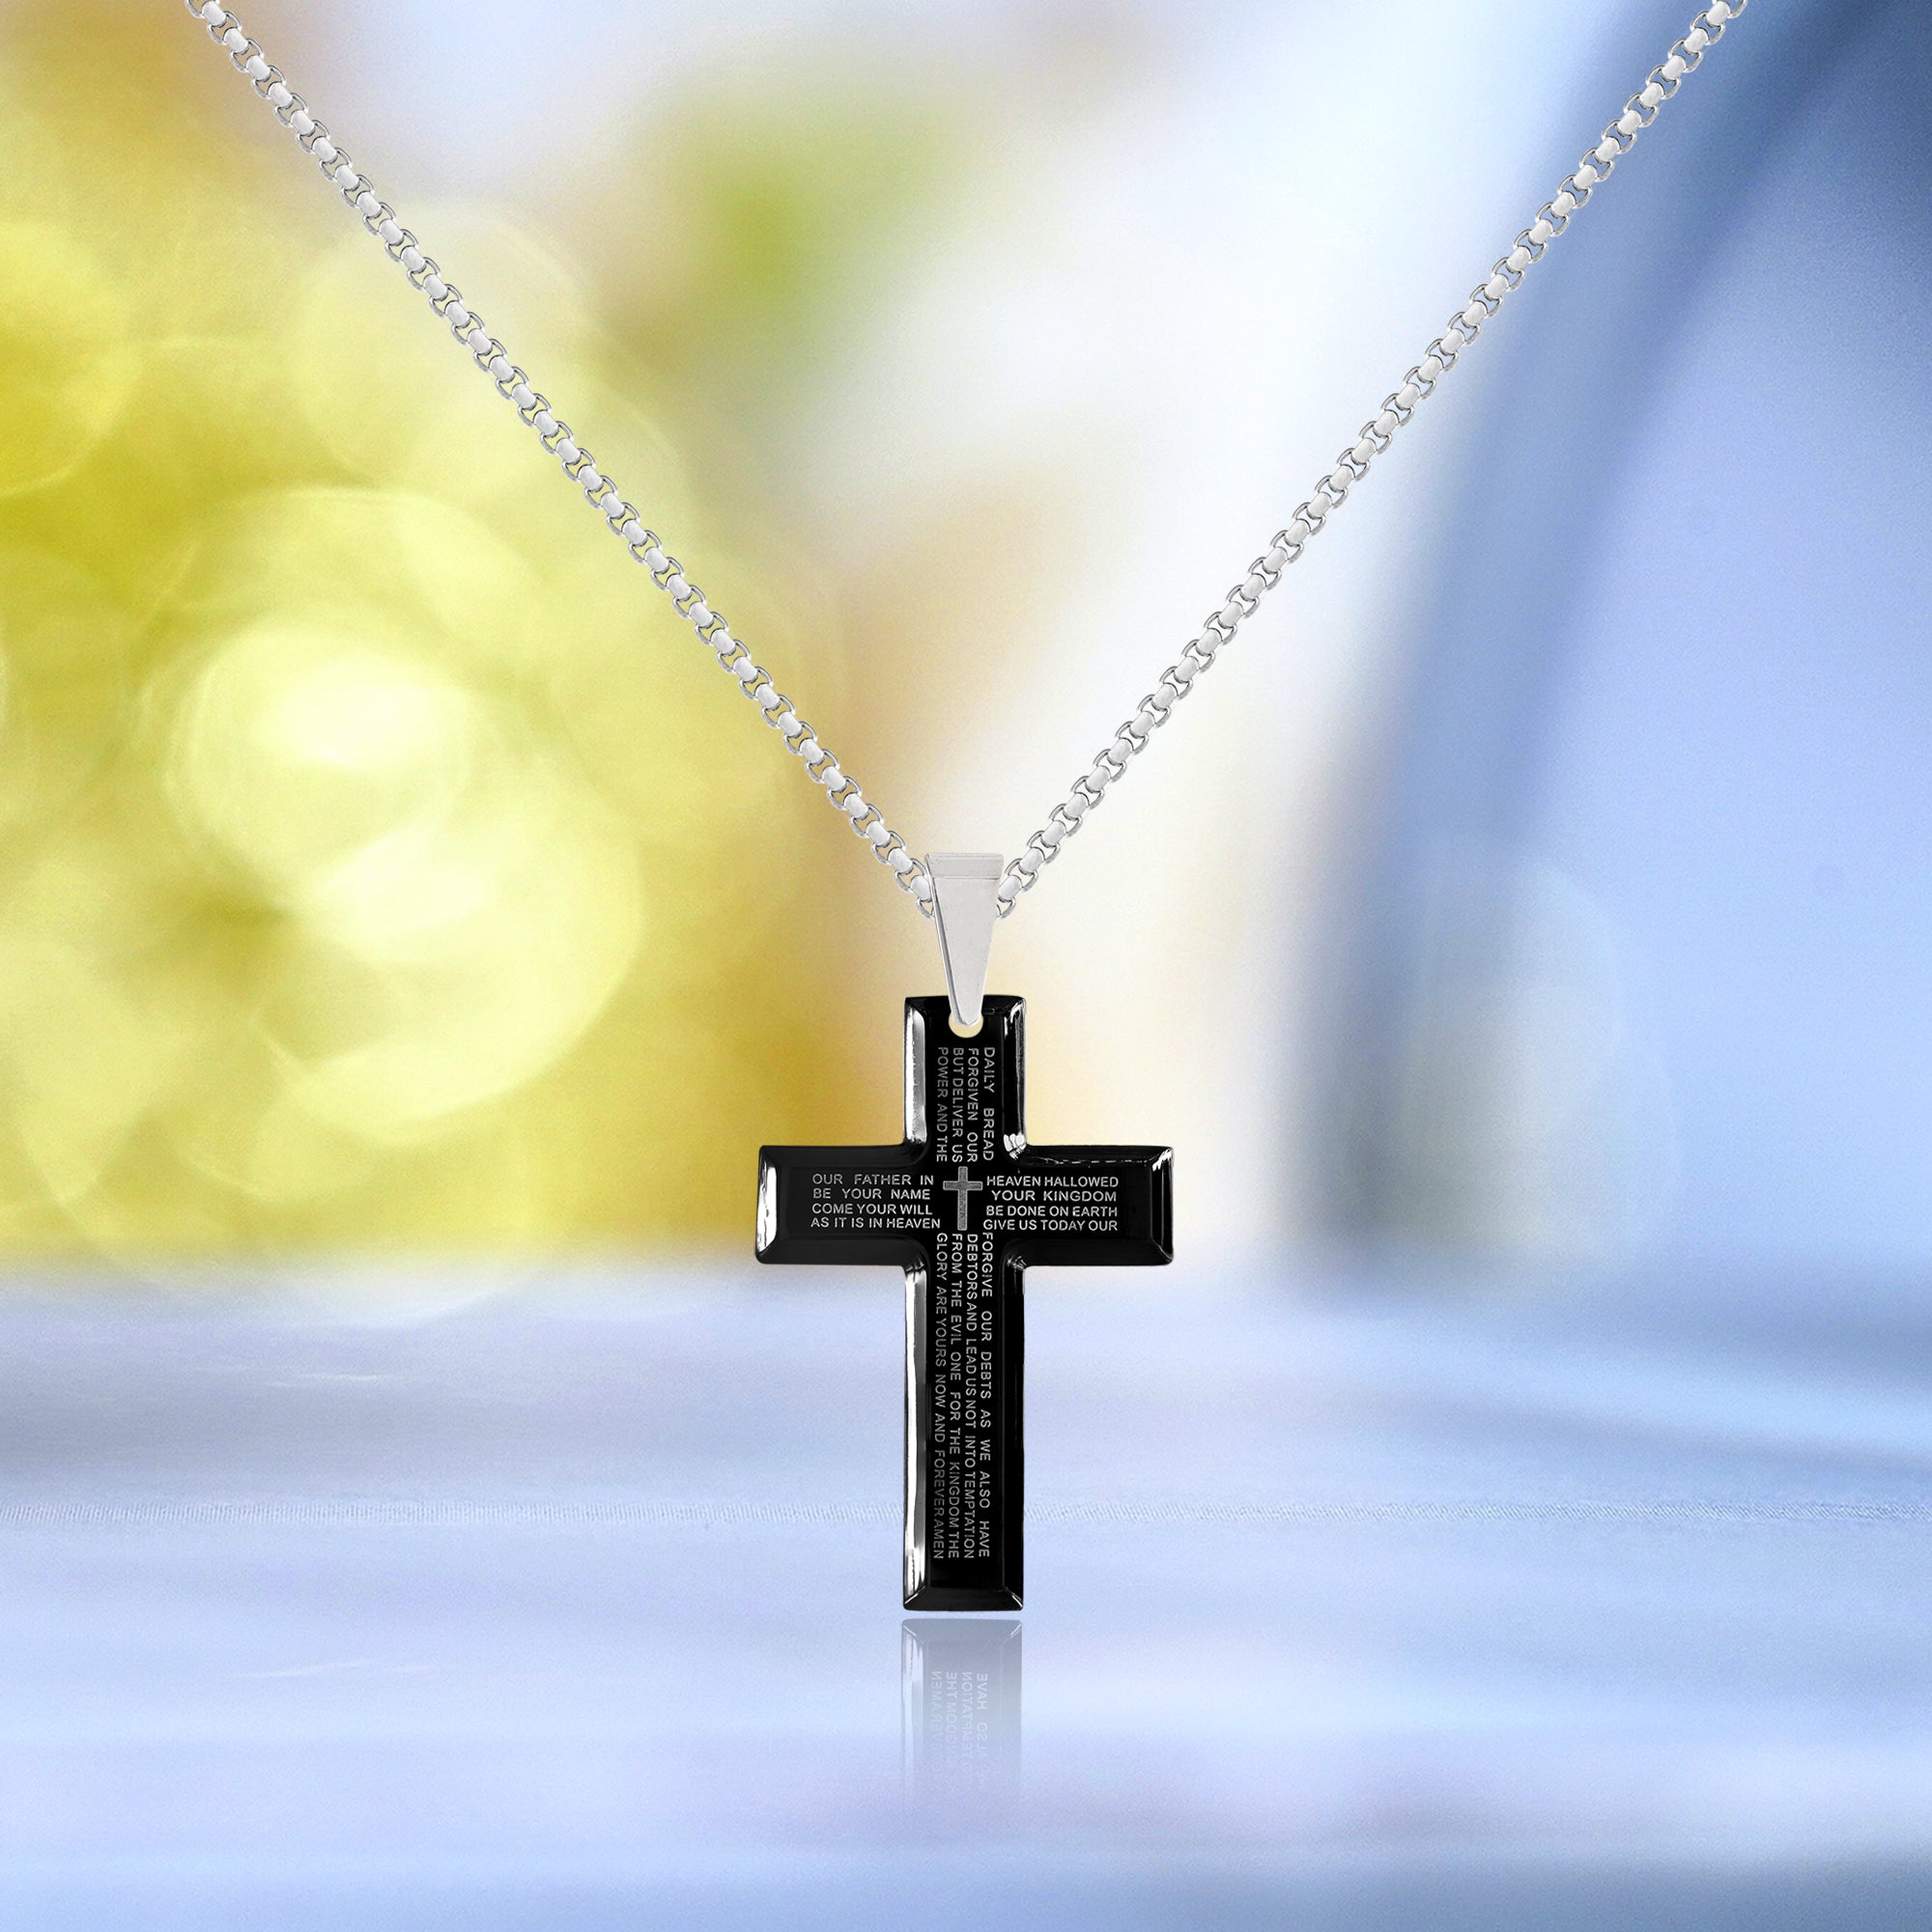 Rehoboth Men's Stainless Steel Lord's Prayer Nail Cross Pendant Necklace  for Boys Women Men Chain 24